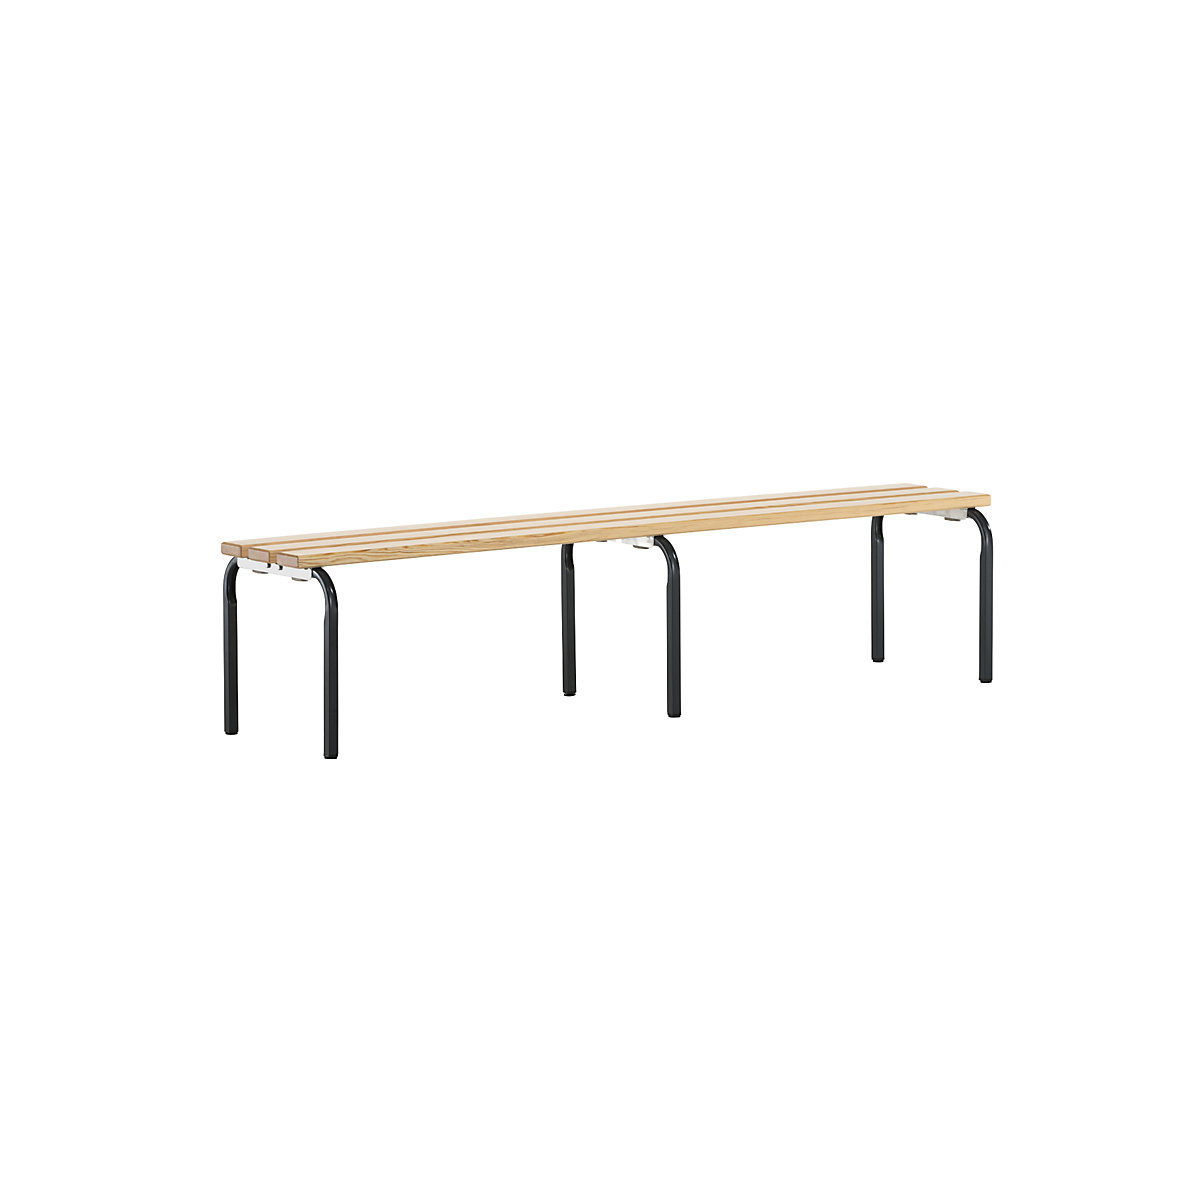 Sypro – Cloakroom bench, stackable, pine wood slats, length 2000 mm, charcoal frame